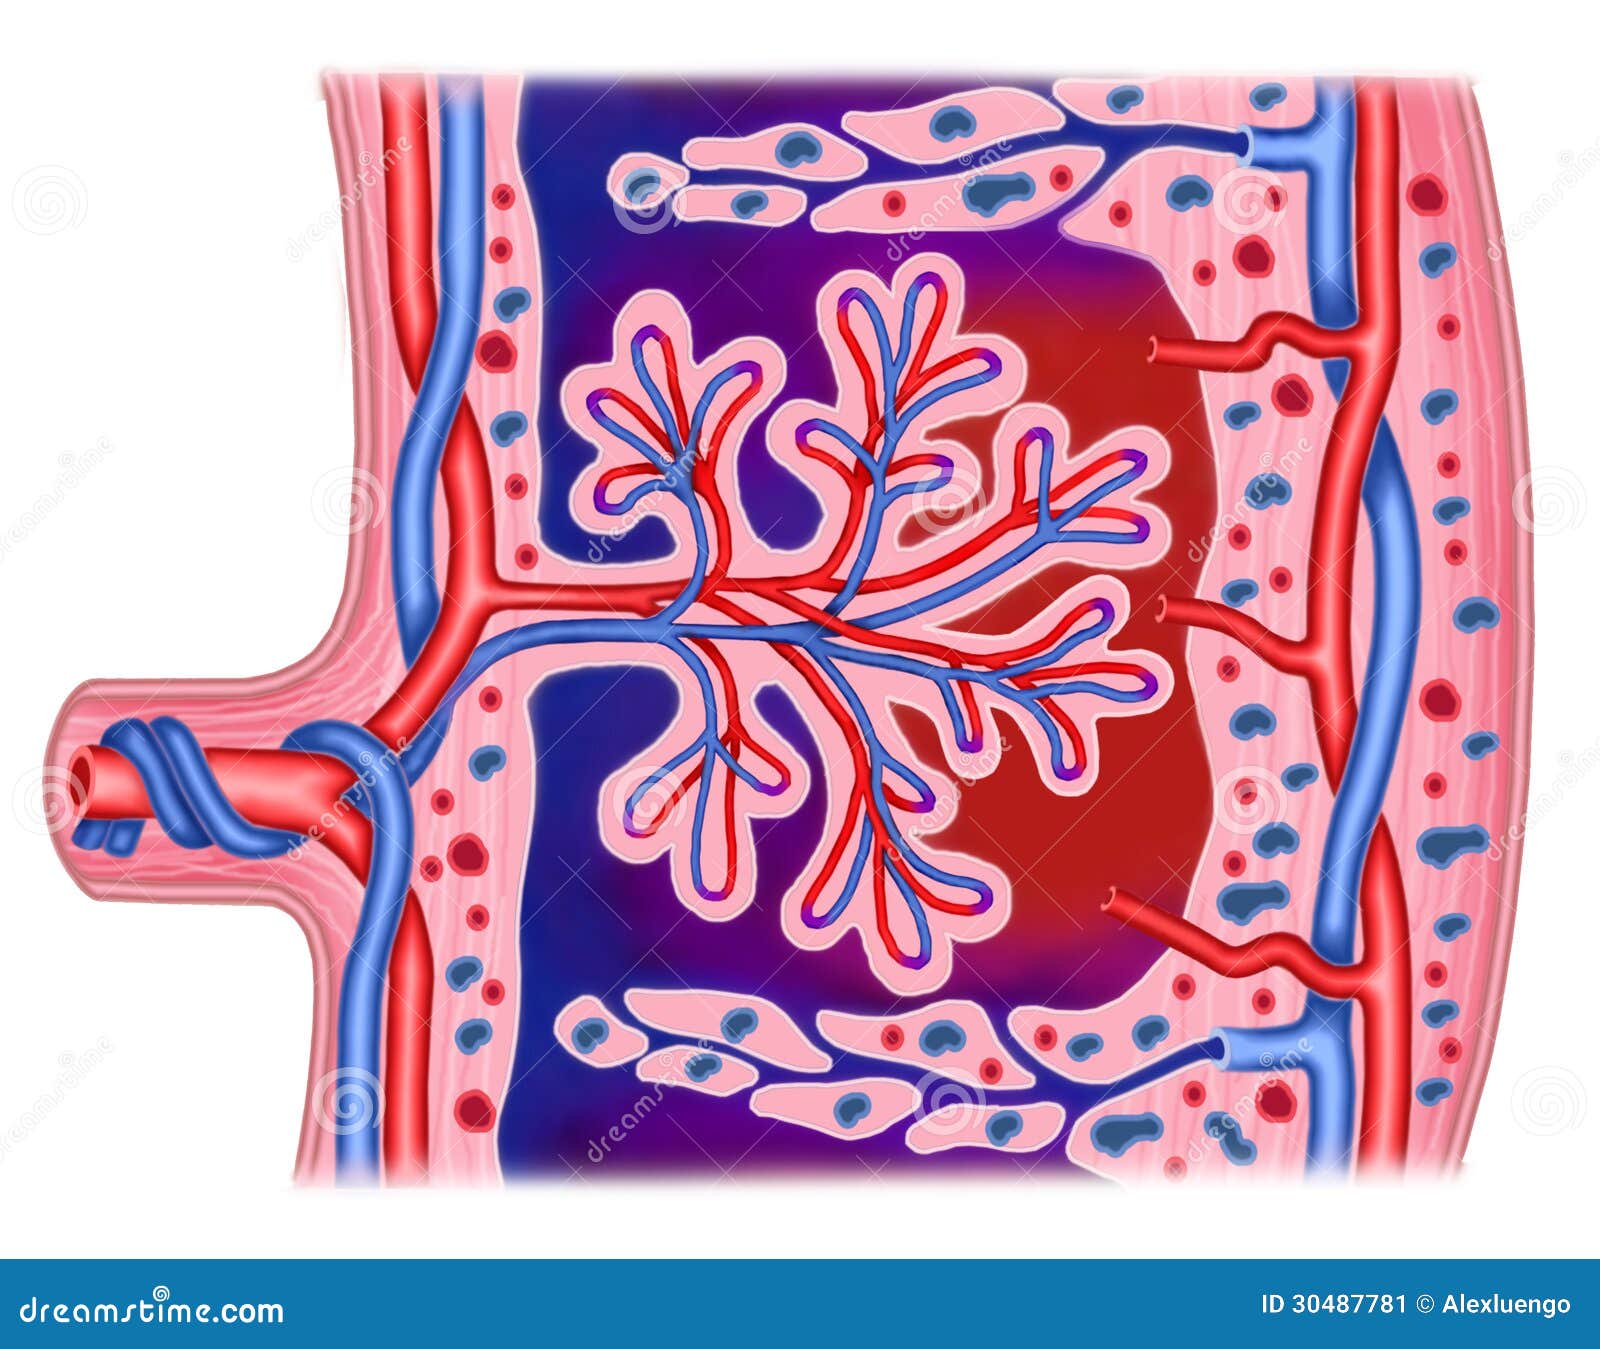 Placenta stock illustration. Illustration of vagina, tubes - 30487781